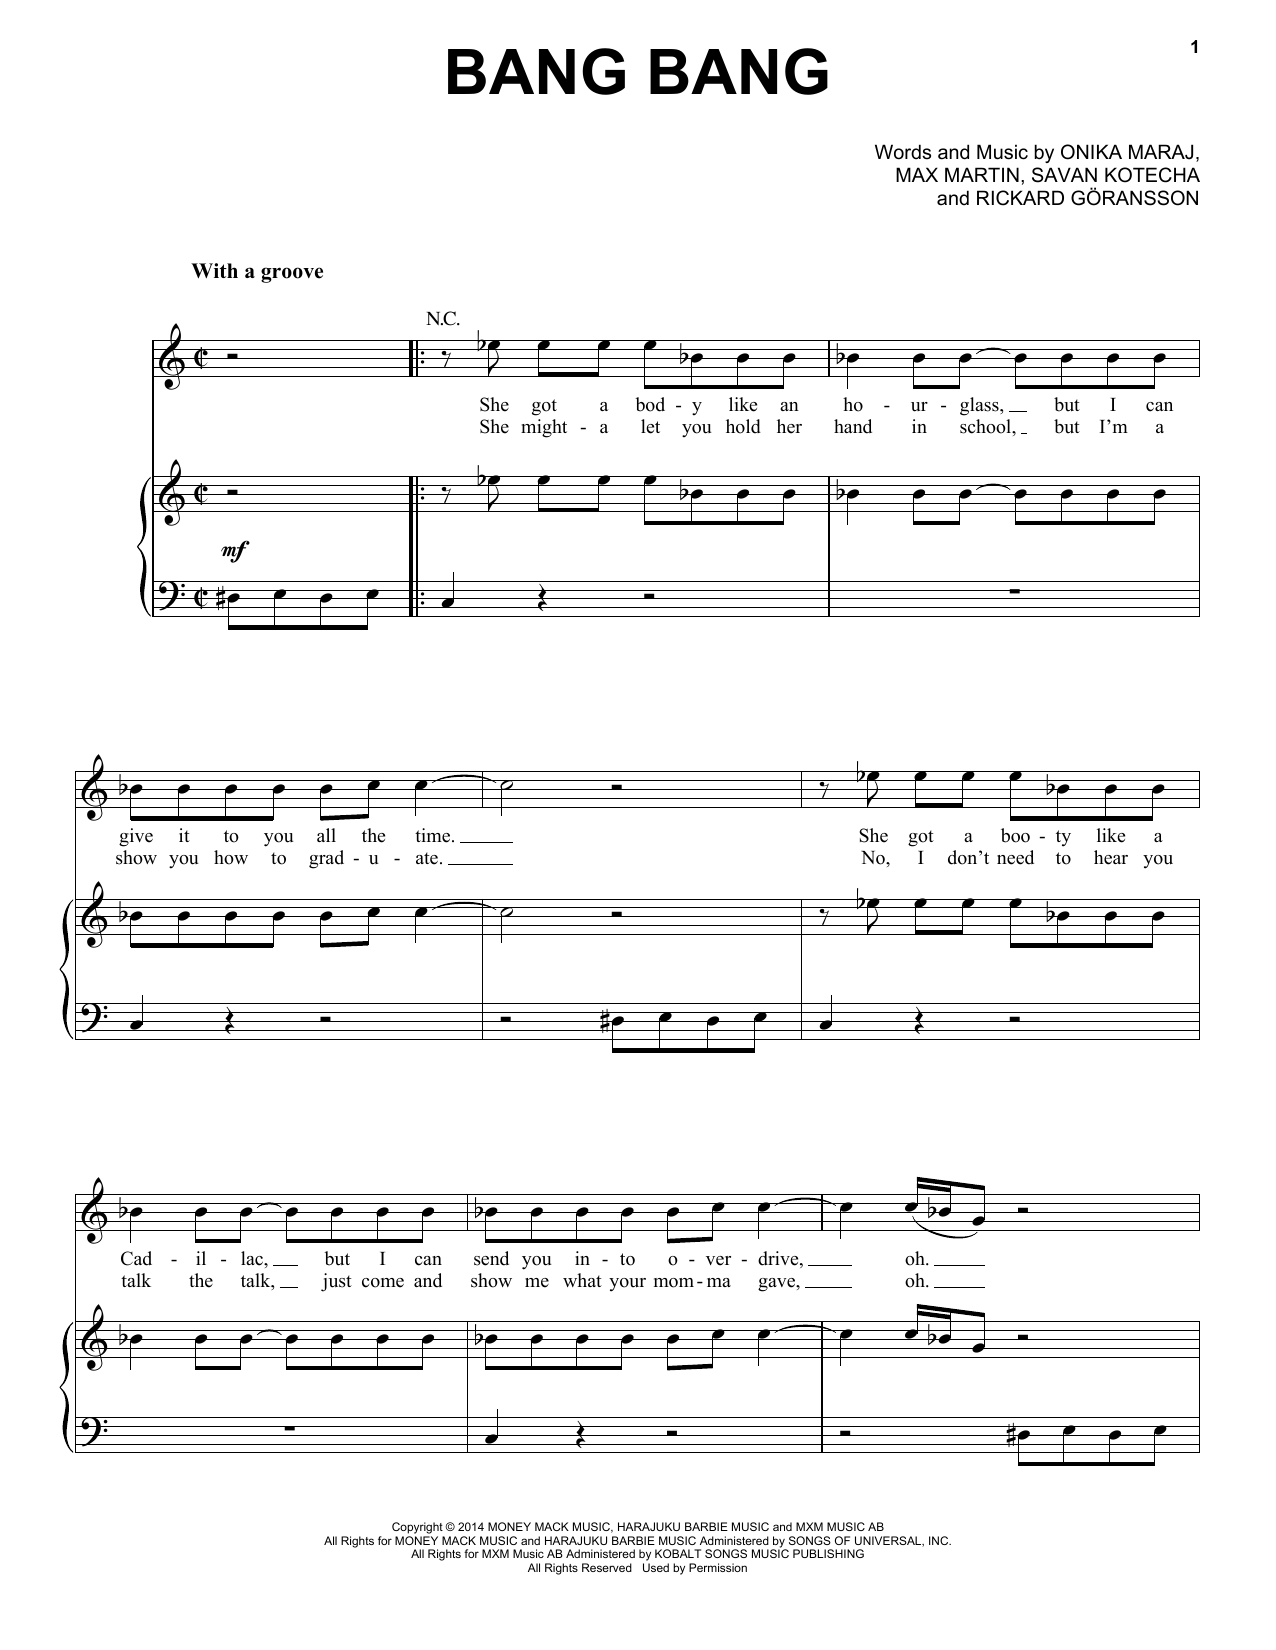 Download Jessie J, Ariana Grande & Nicki Minaj Bang Bang Sheet Music and learn how to play Piano, Vocal & Guitar (Right-Hand Melody) PDF digital score in minutes